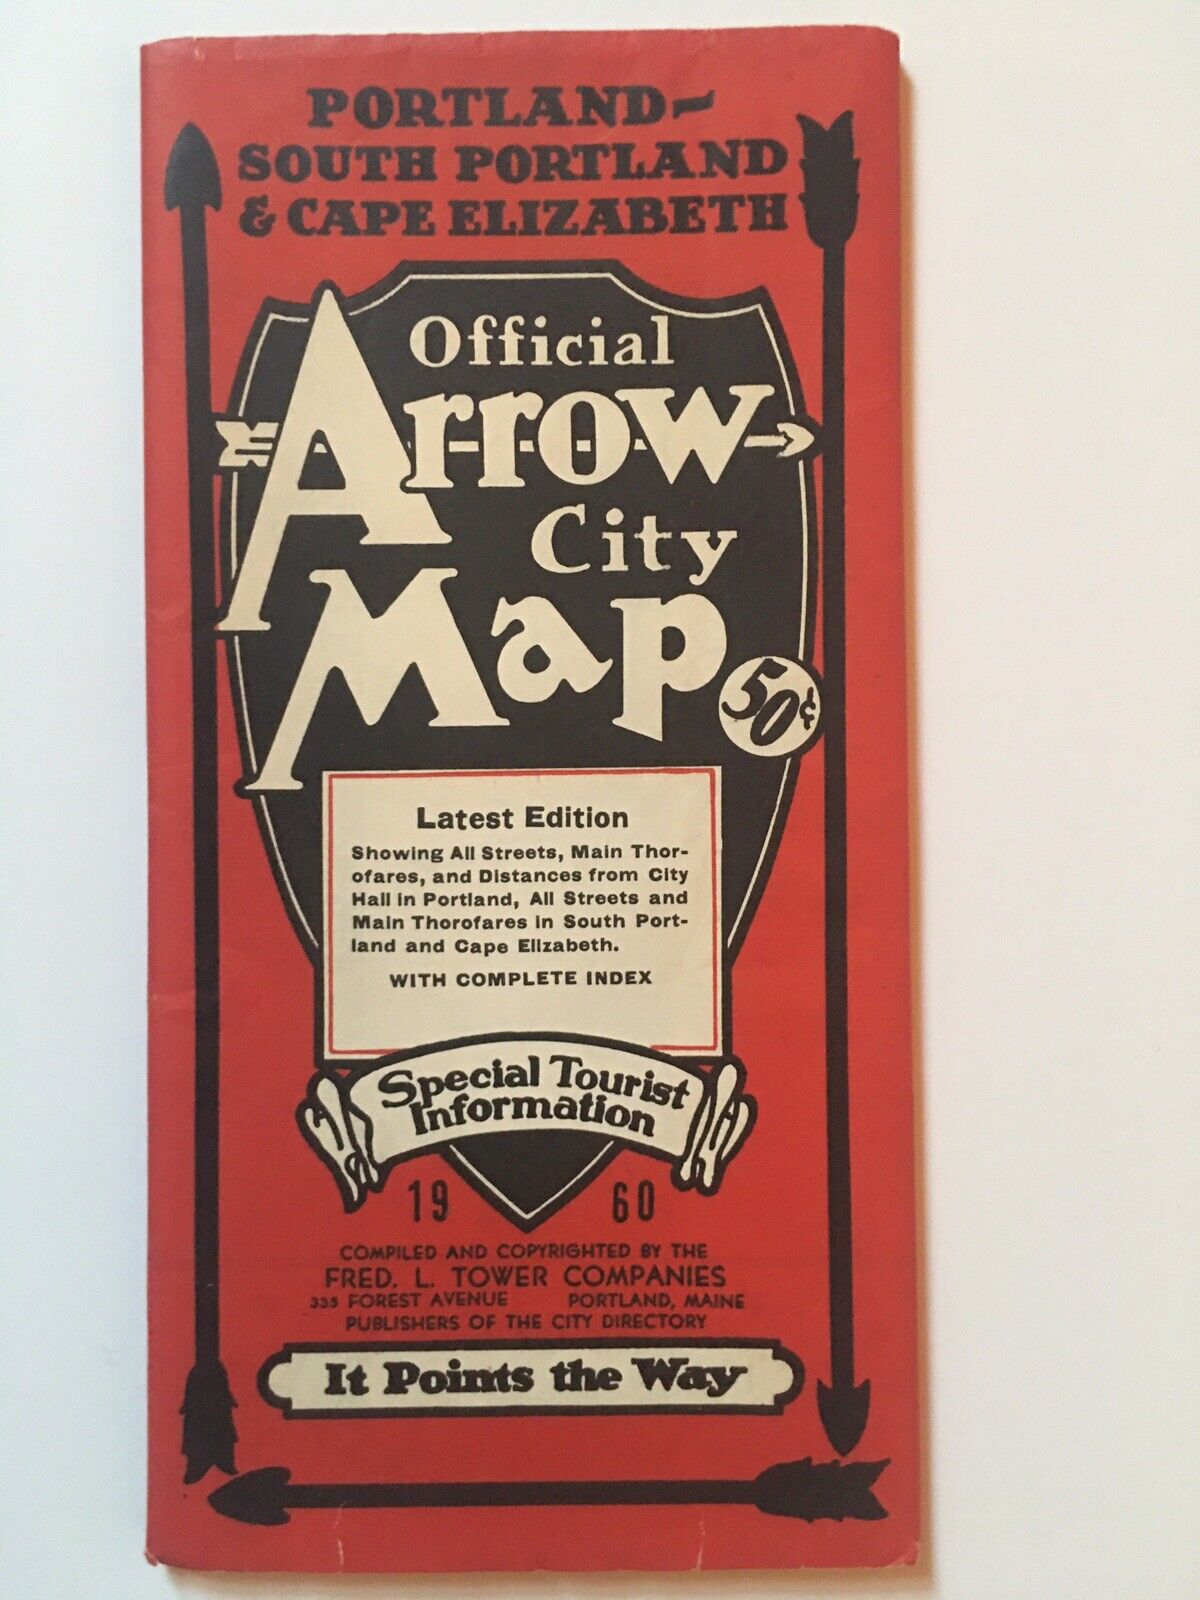 1960 Official Arrow city MAP Portland So Po Cape Elizabeth Maine Fred L Tower Co